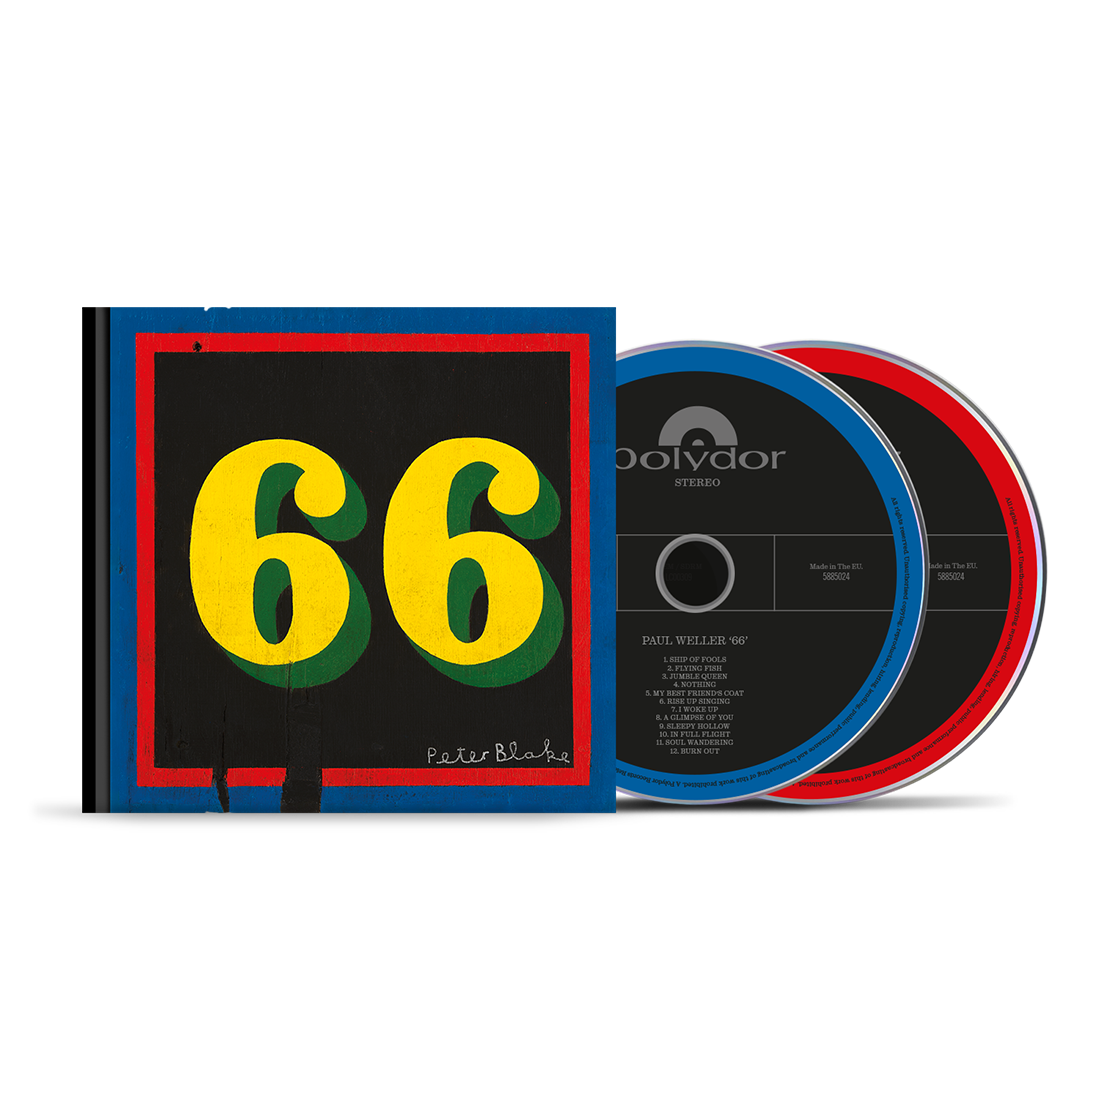 Paul Weller - 66 Deluxe CD (Includes Bonus Tracks)